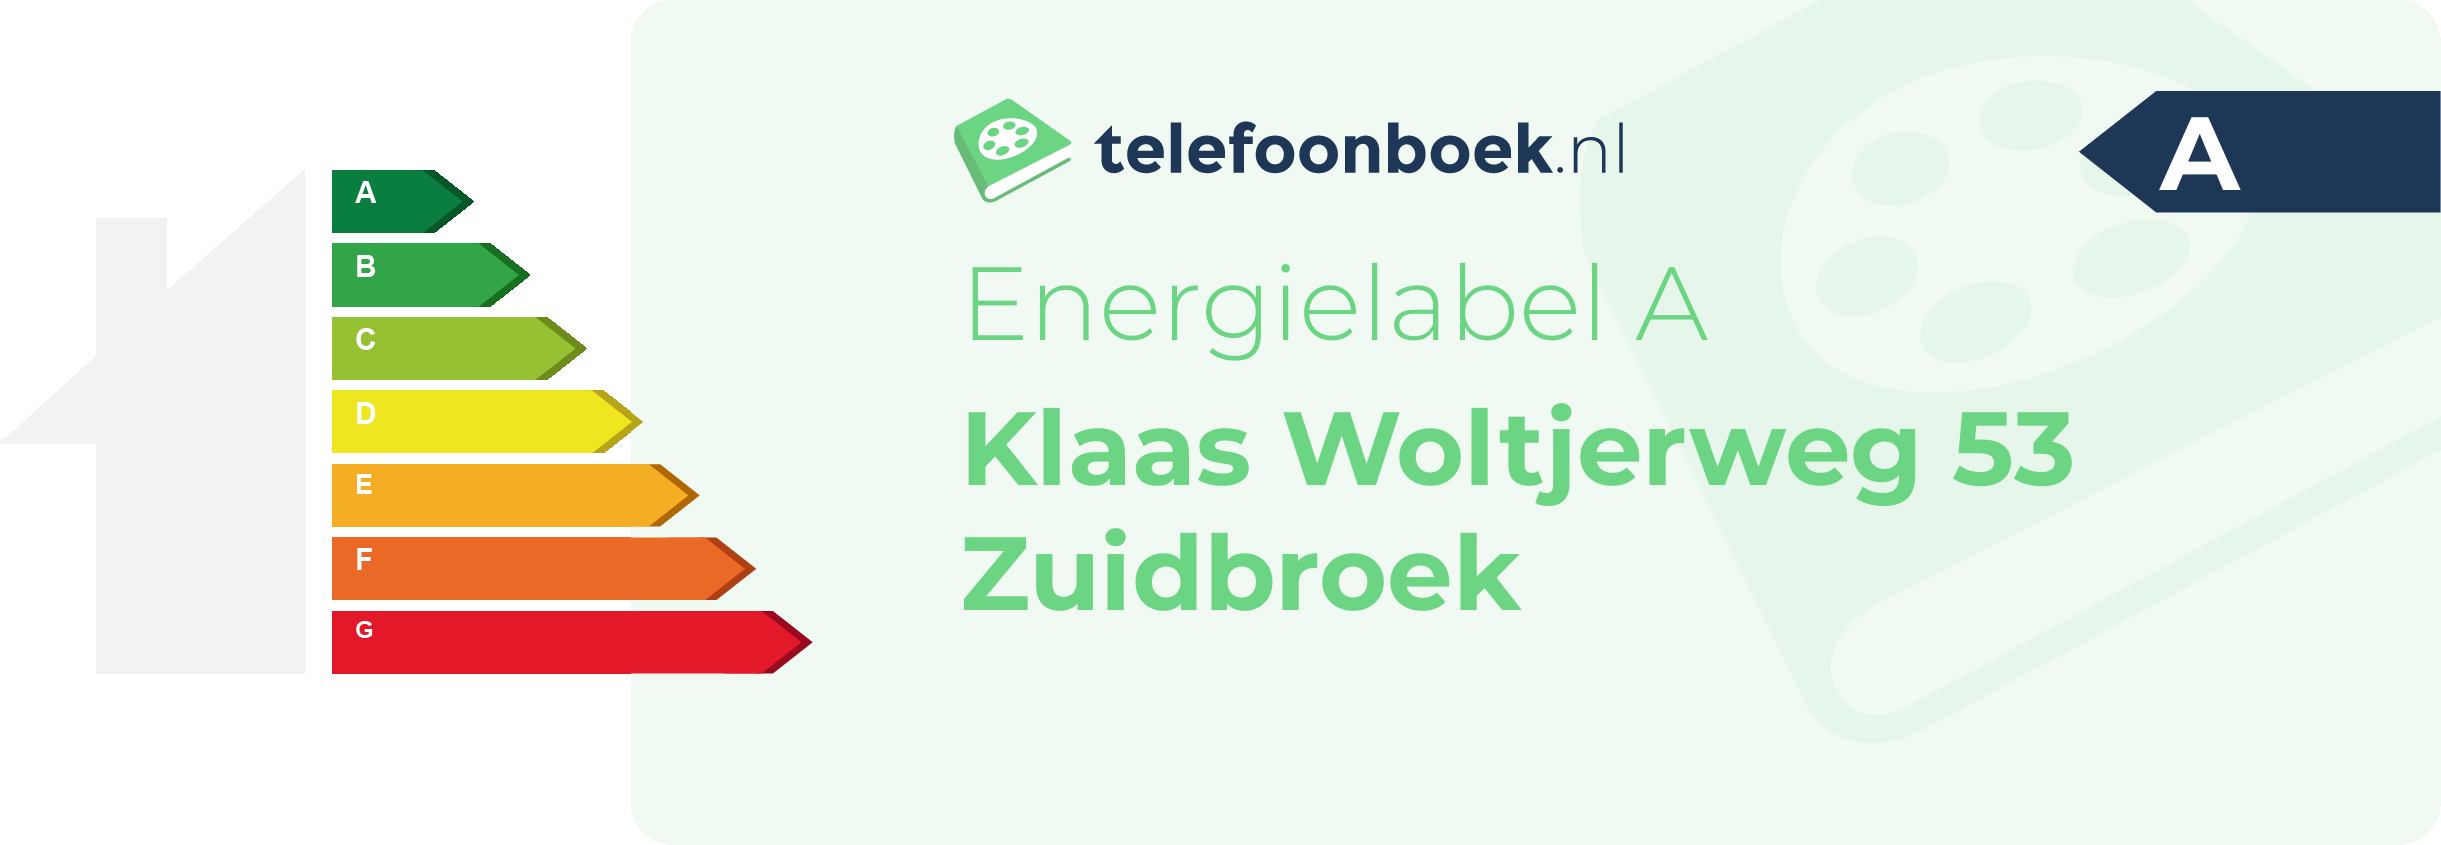 Energielabel Klaas Woltjerweg 53 Zuidbroek